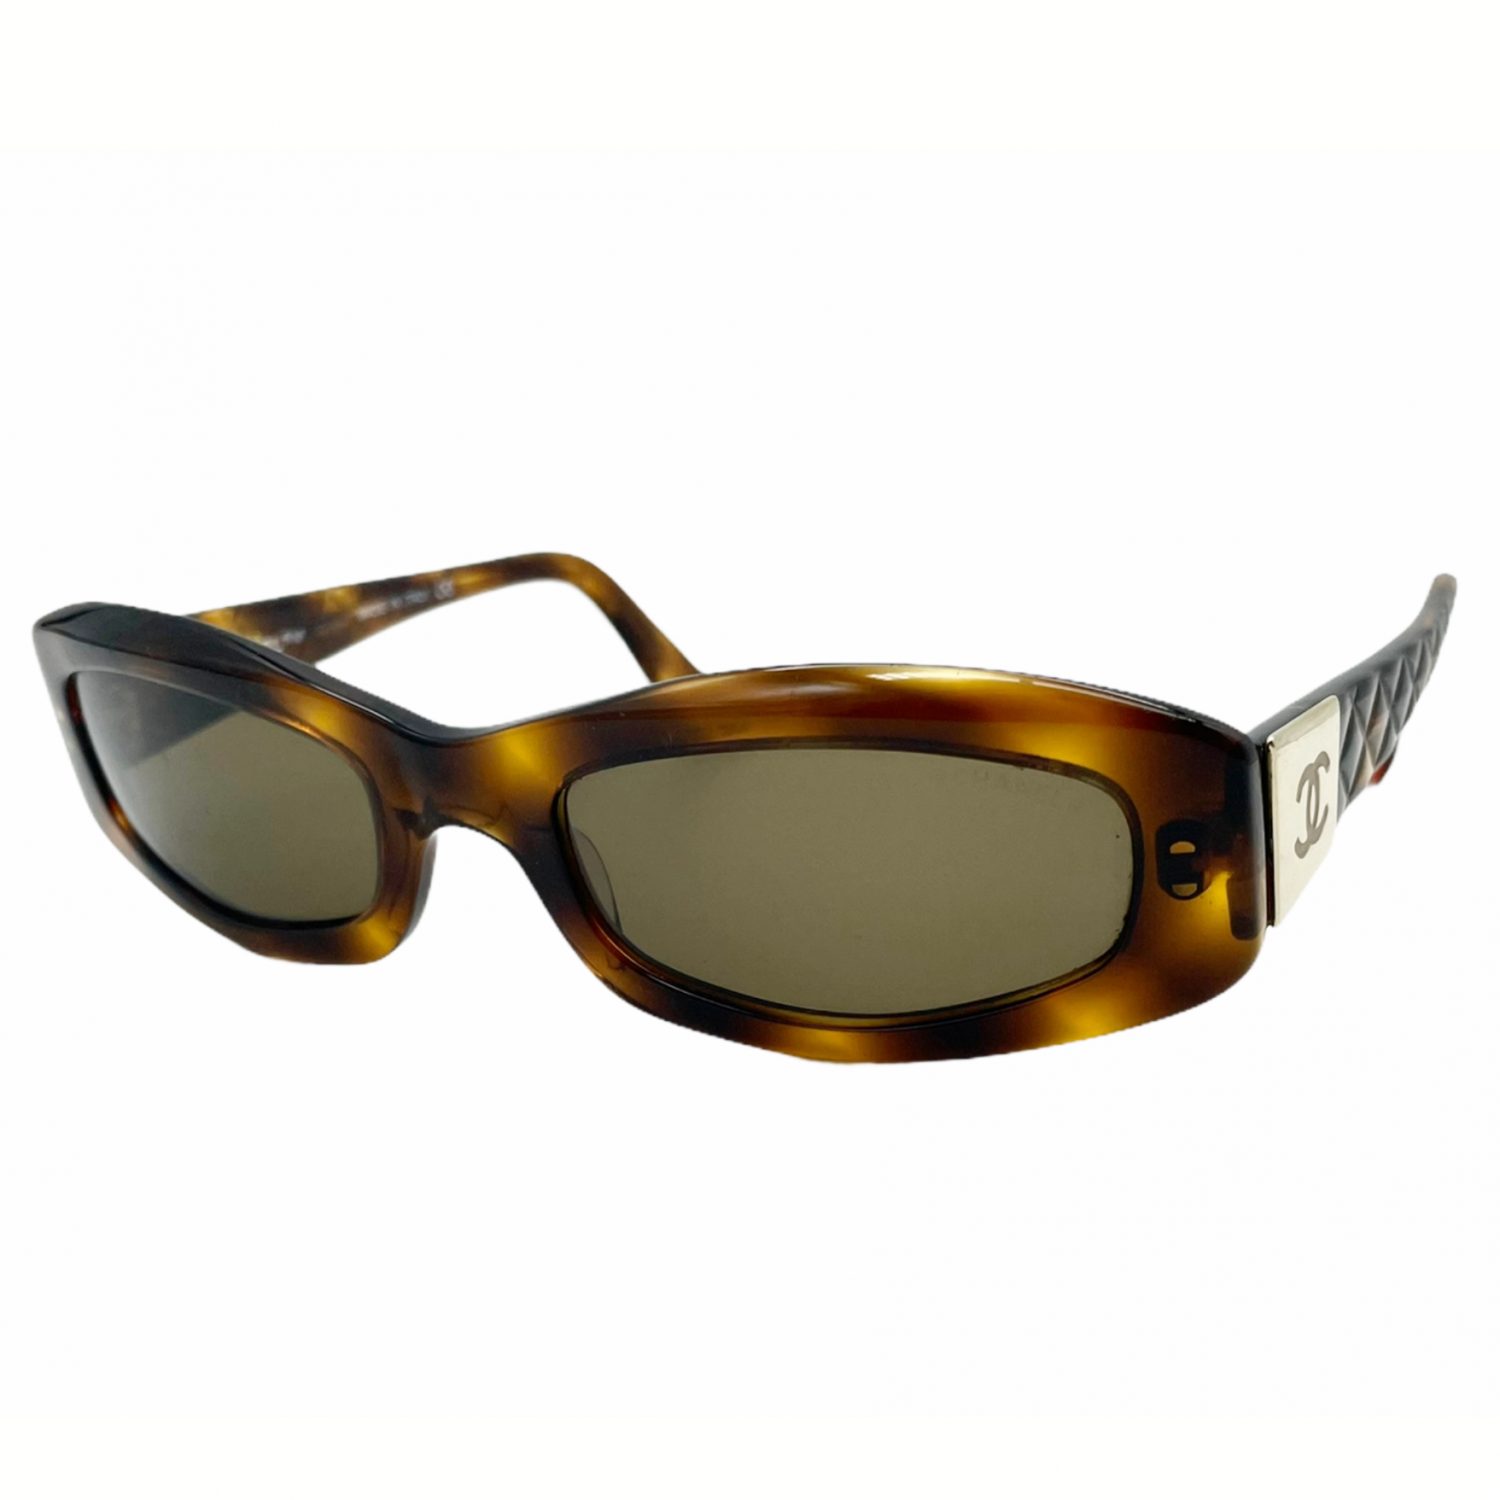 Vintage Chanel Chunky Sunglasses in Tortoiseshell and Gold | NITRYL